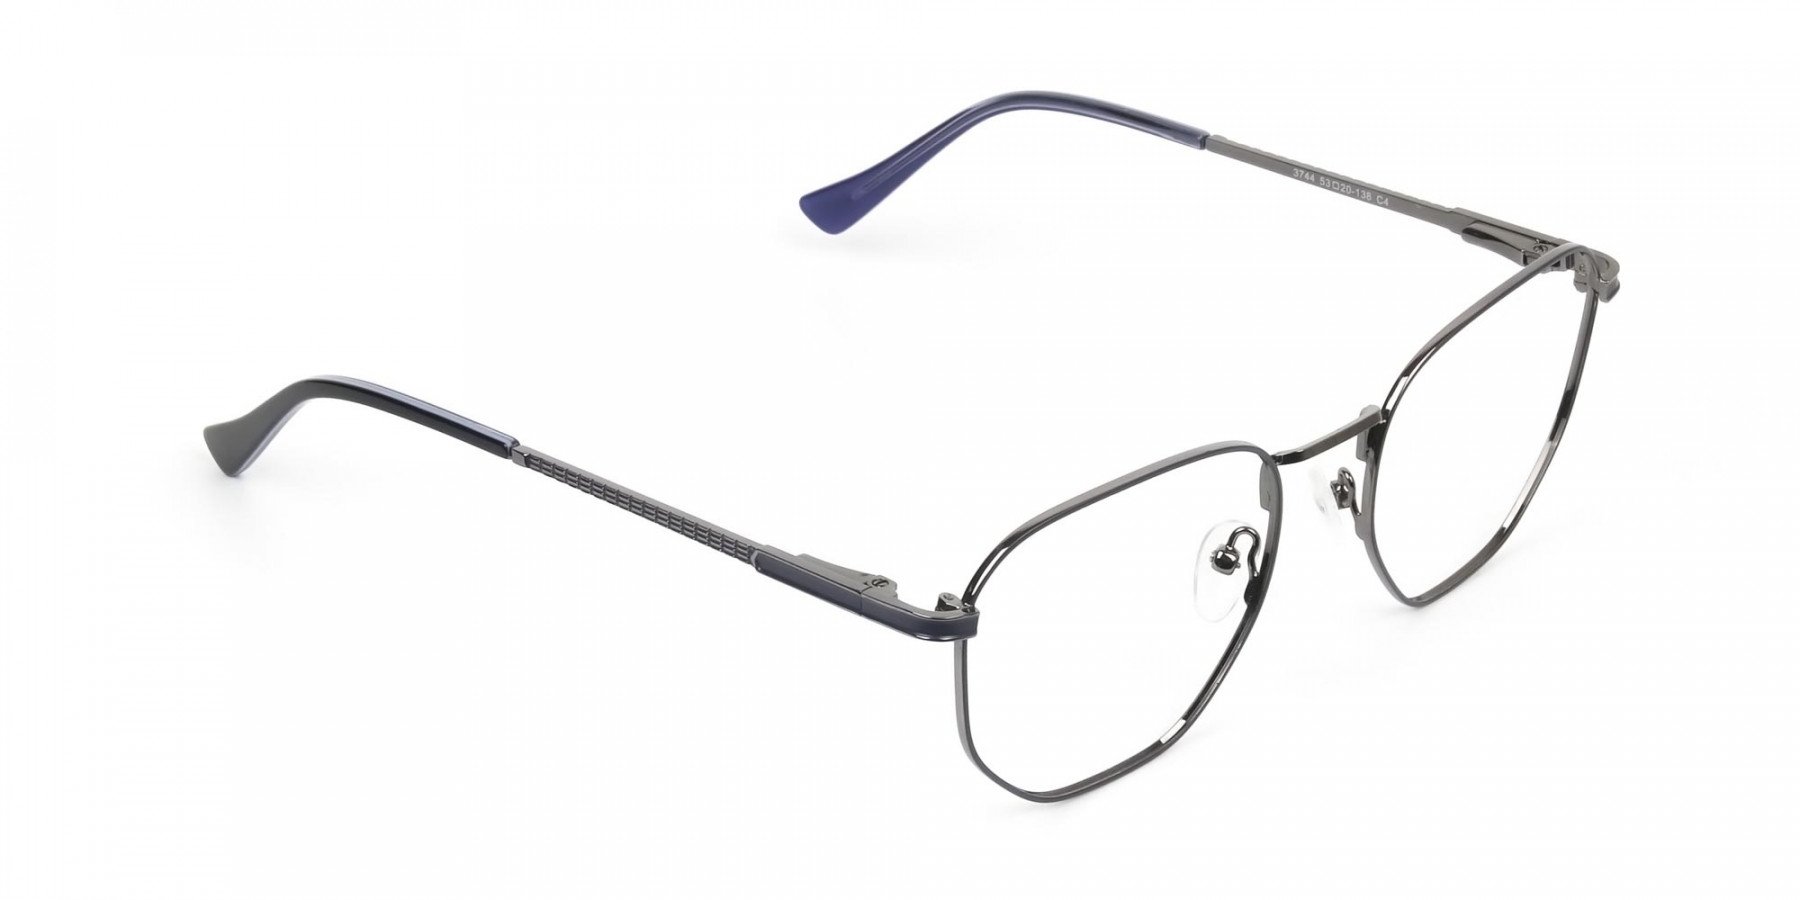 Lightweight Silver & Blue Geometric Glasses - 1